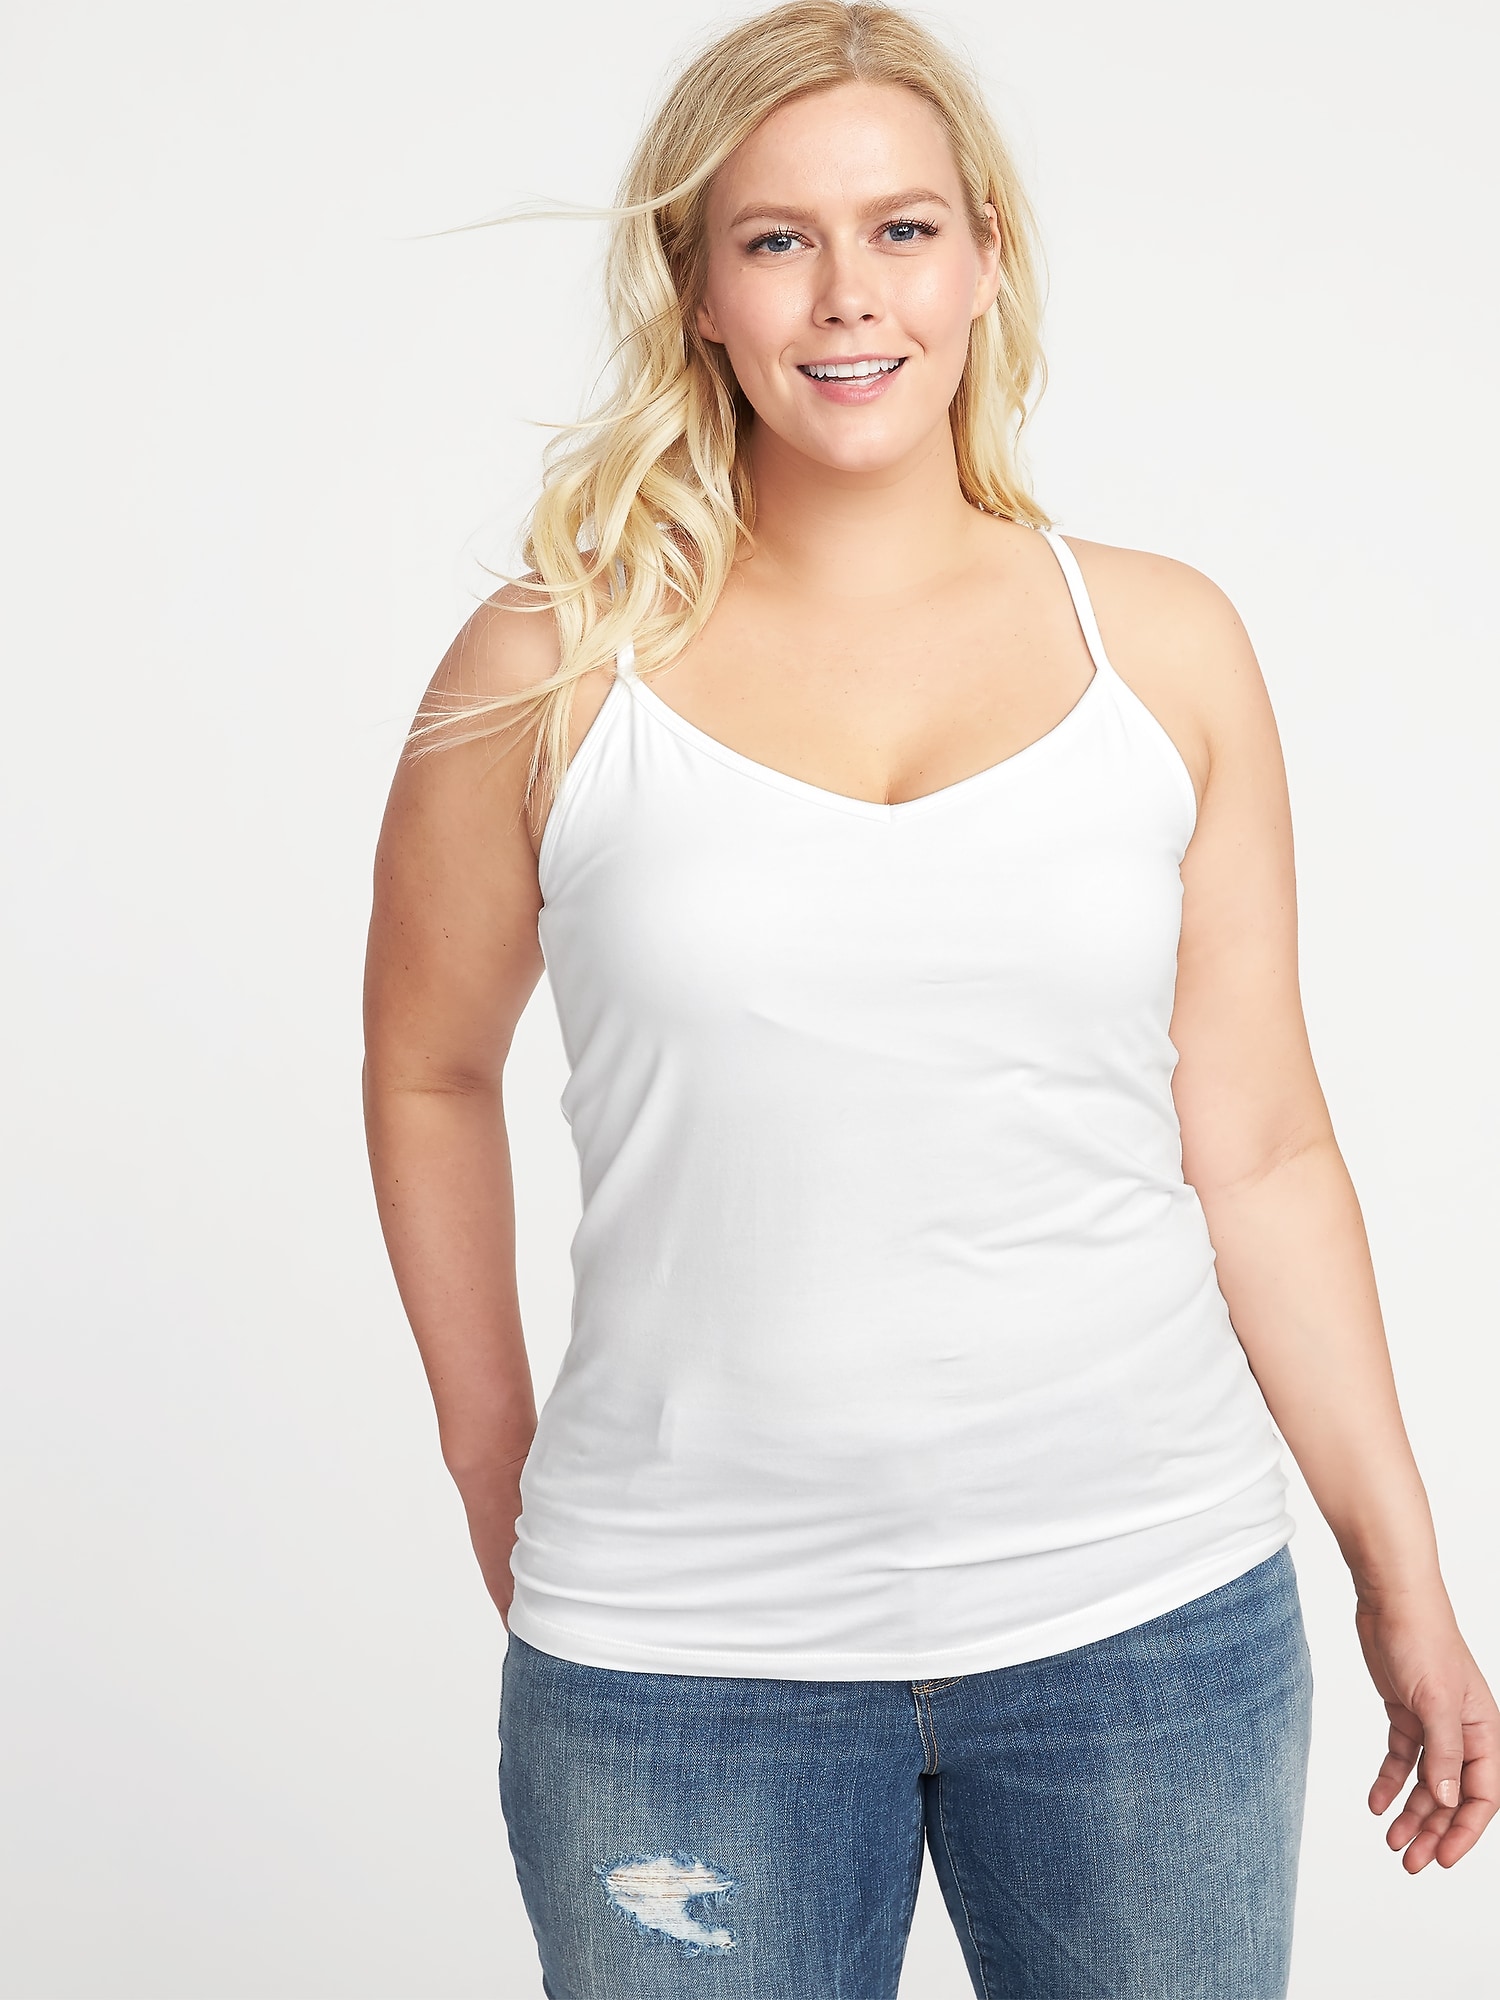 JGGSPWM Women Cotton Plus Size Camisole Shelf Bra Cami Tank Tops Adjustable  Spaghetti Strap Tank Top Soft Comfy Vest Summer Basic Camisole White L